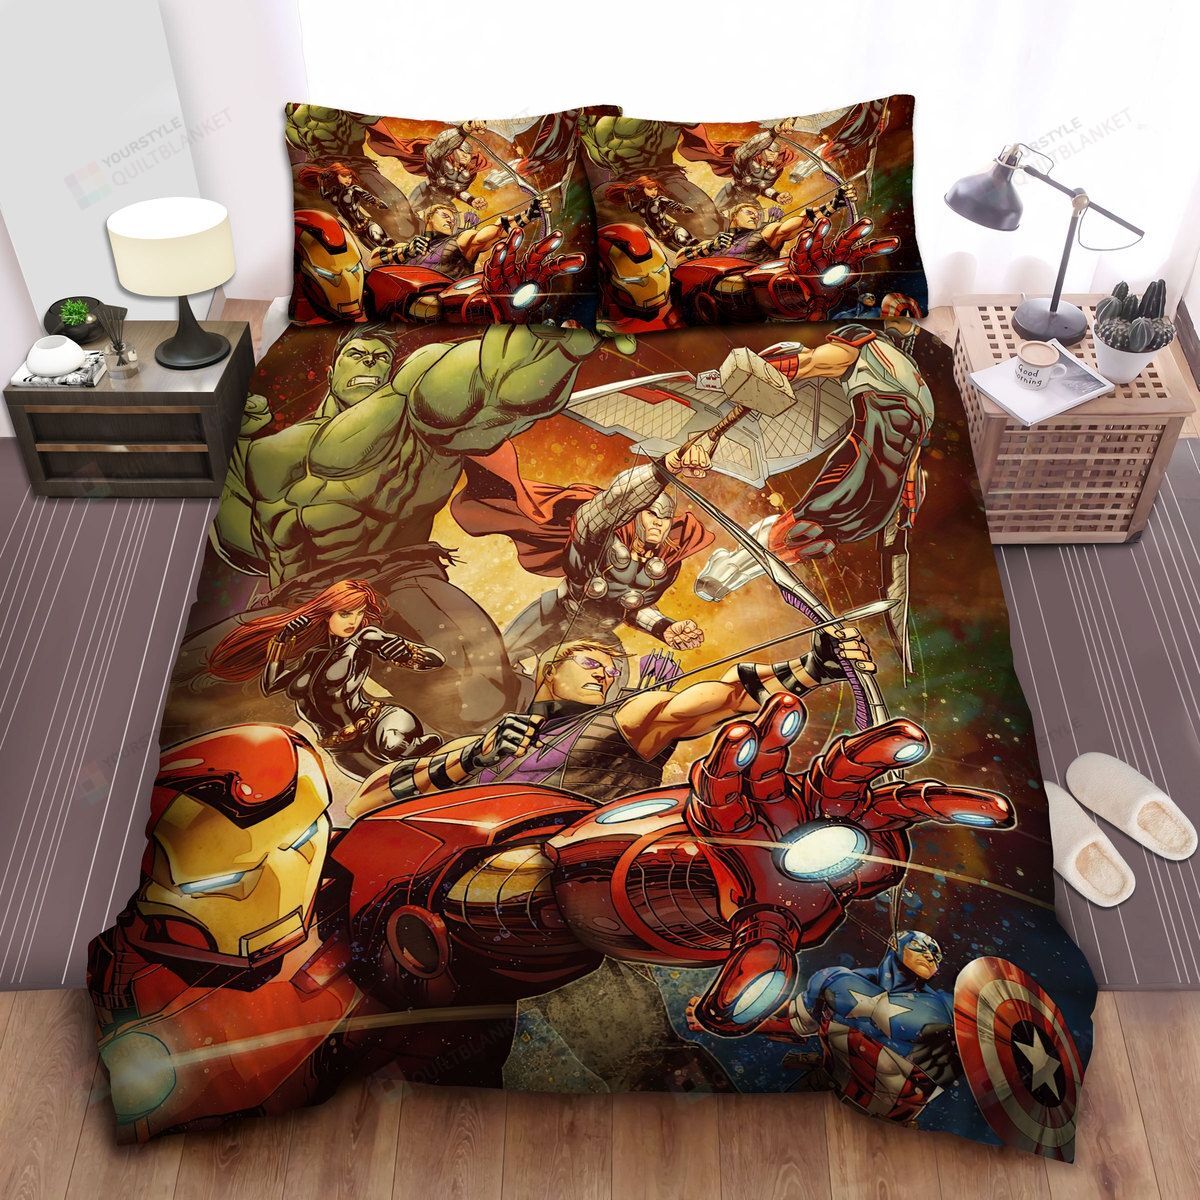 Marvel Avengers In A Epic Battle Bed Sheets Spread Comforter Duvet Cover Bedding Sets